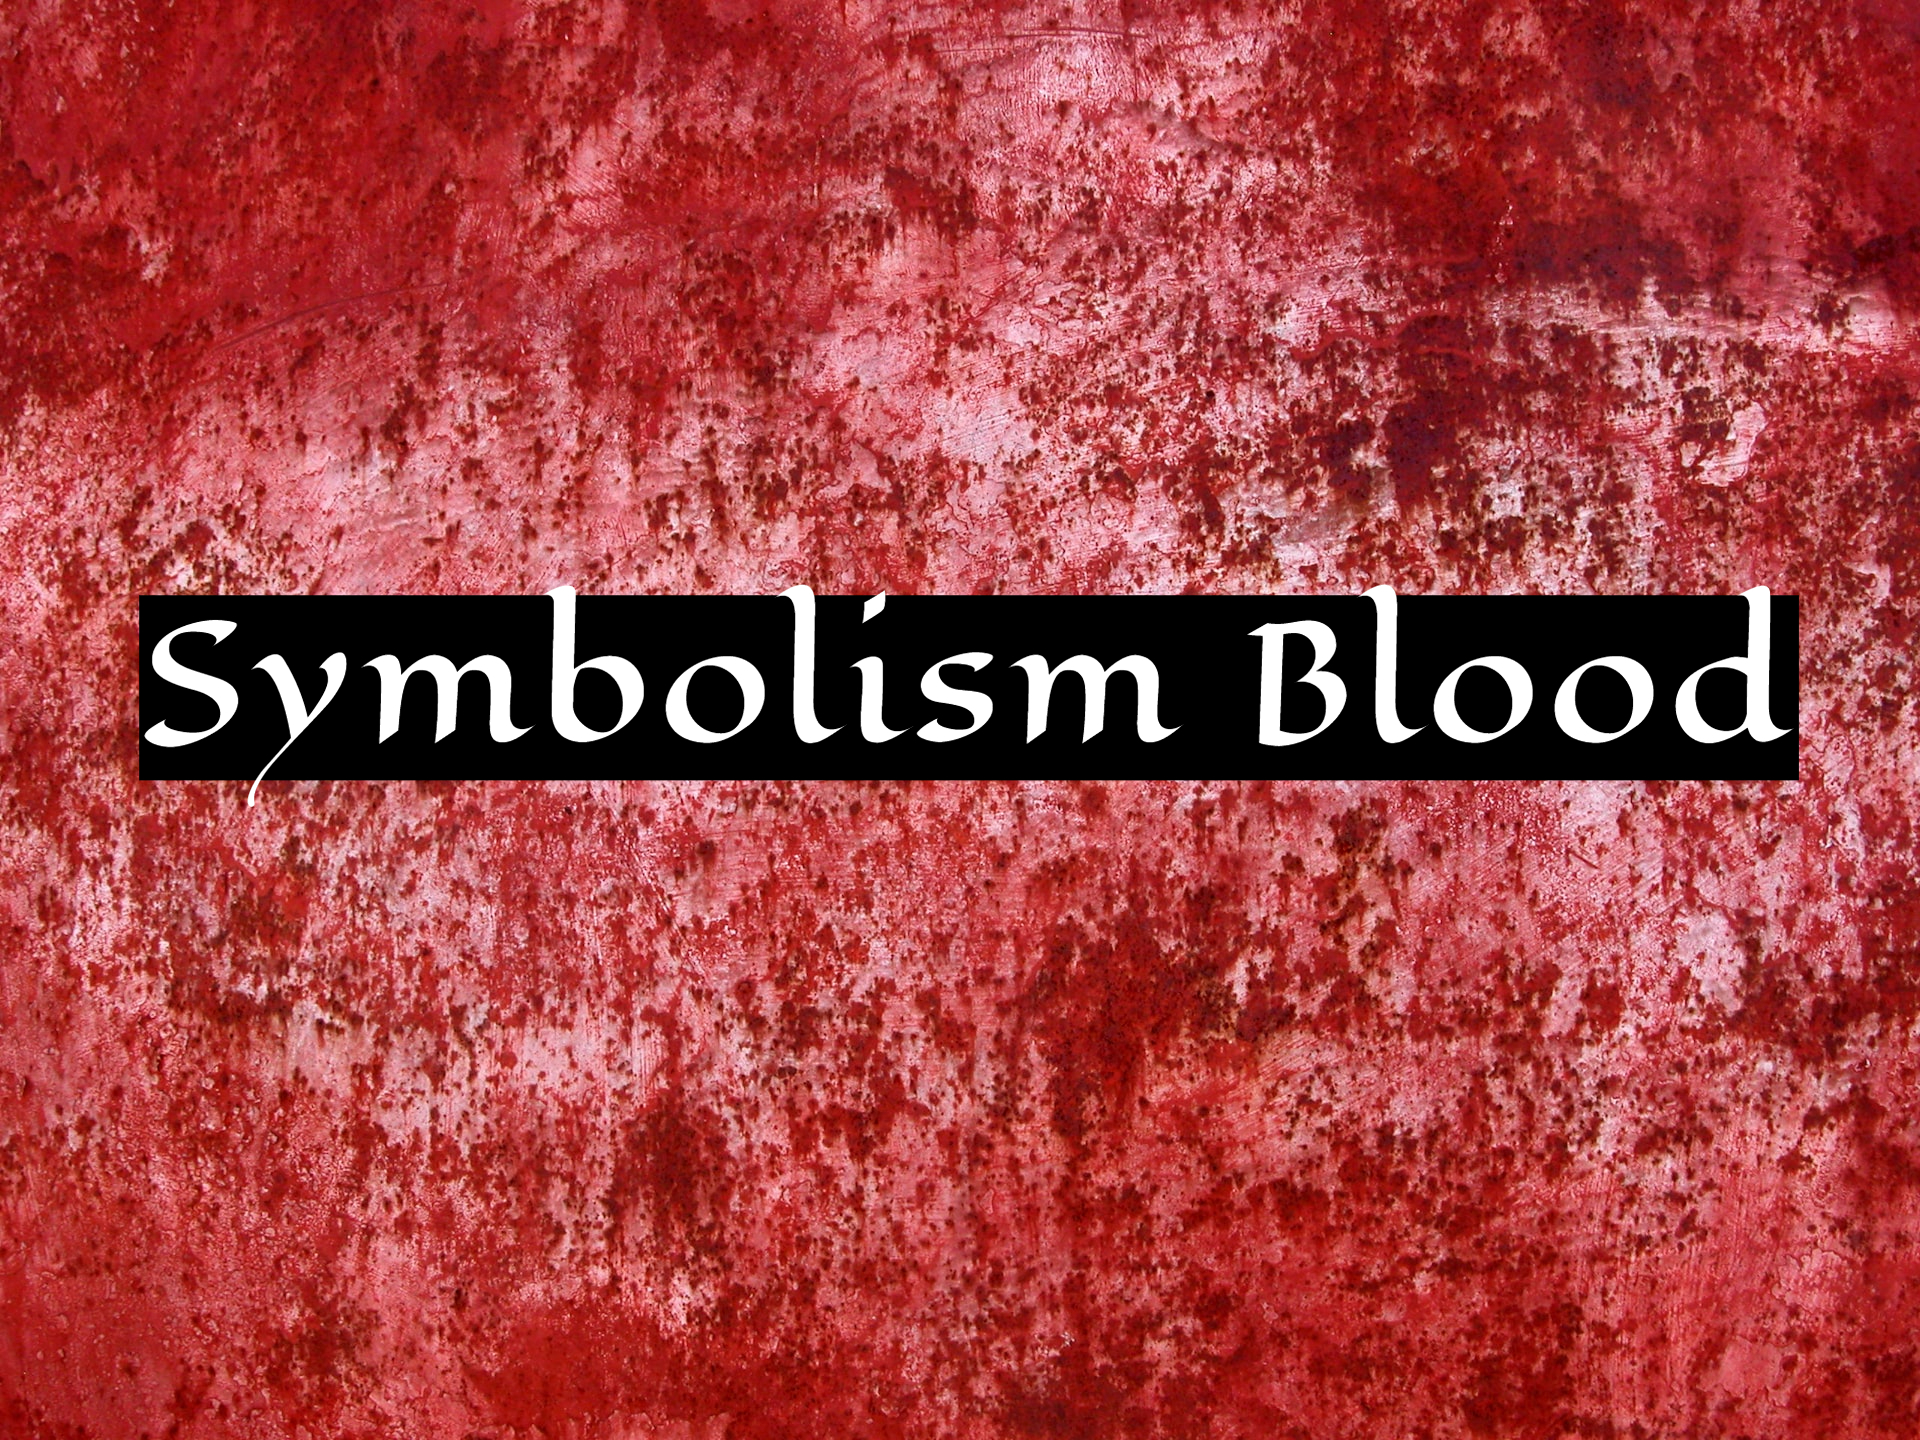 Symbolism Blood Represents - A Sacrifice Made